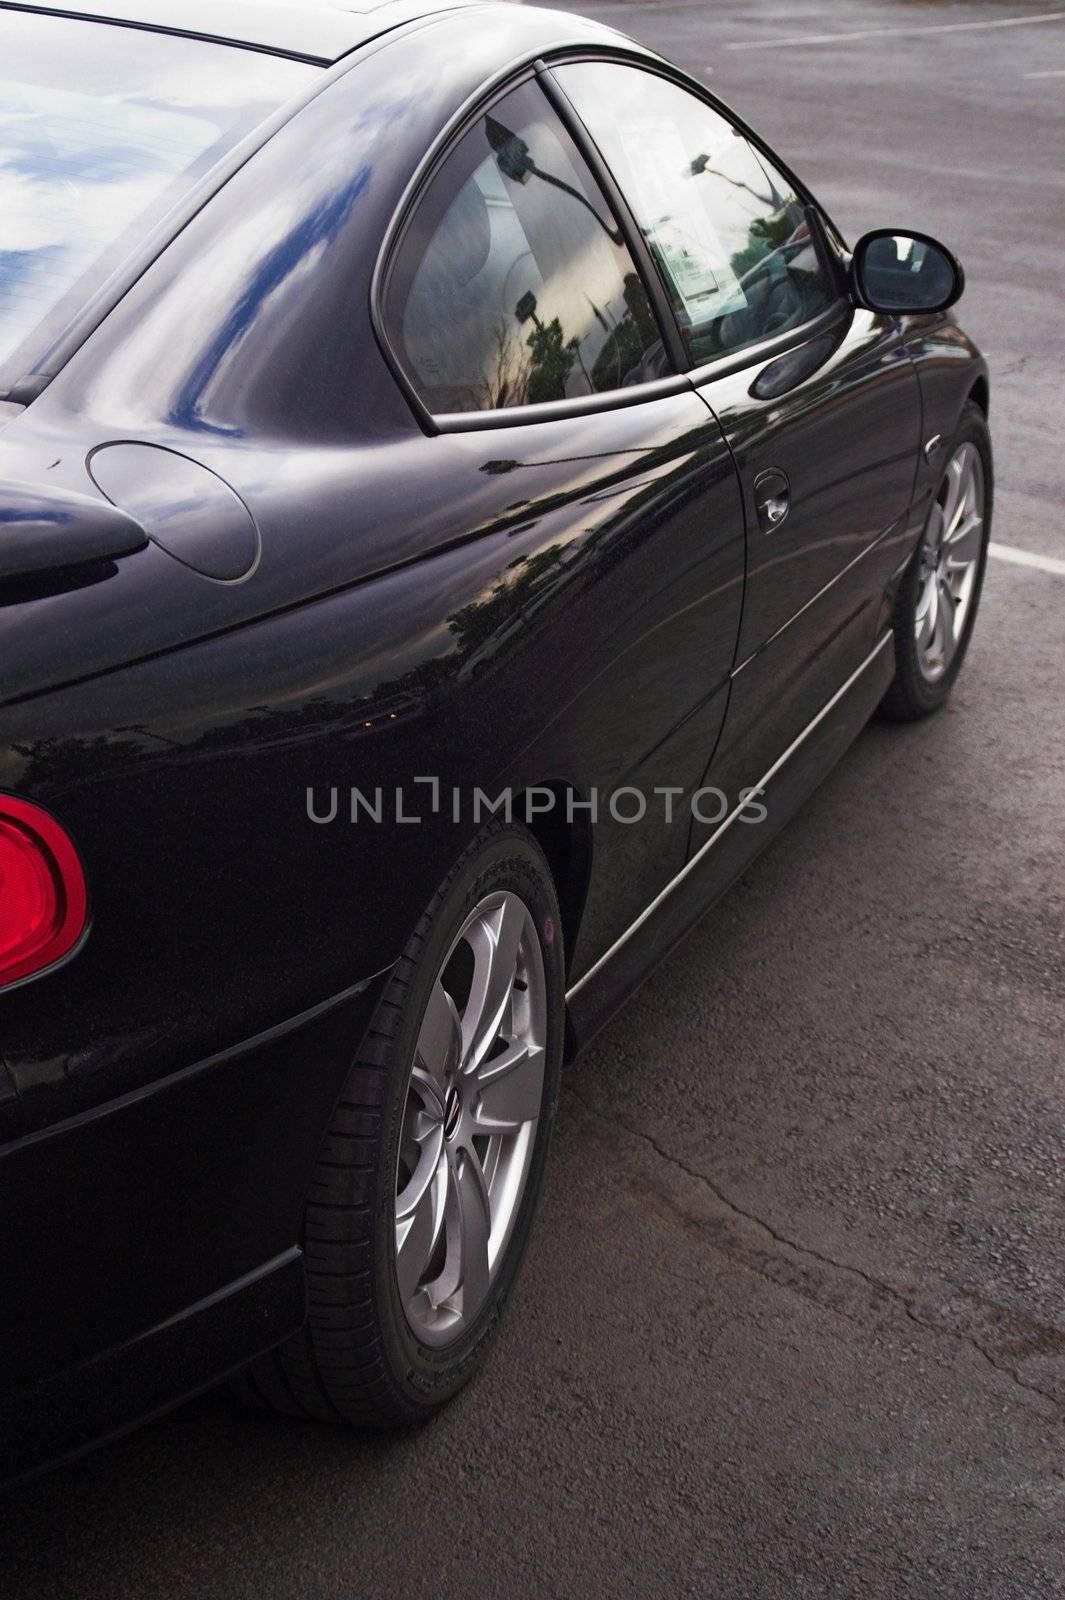 2006 Pontiac GTO by jdebordphoto